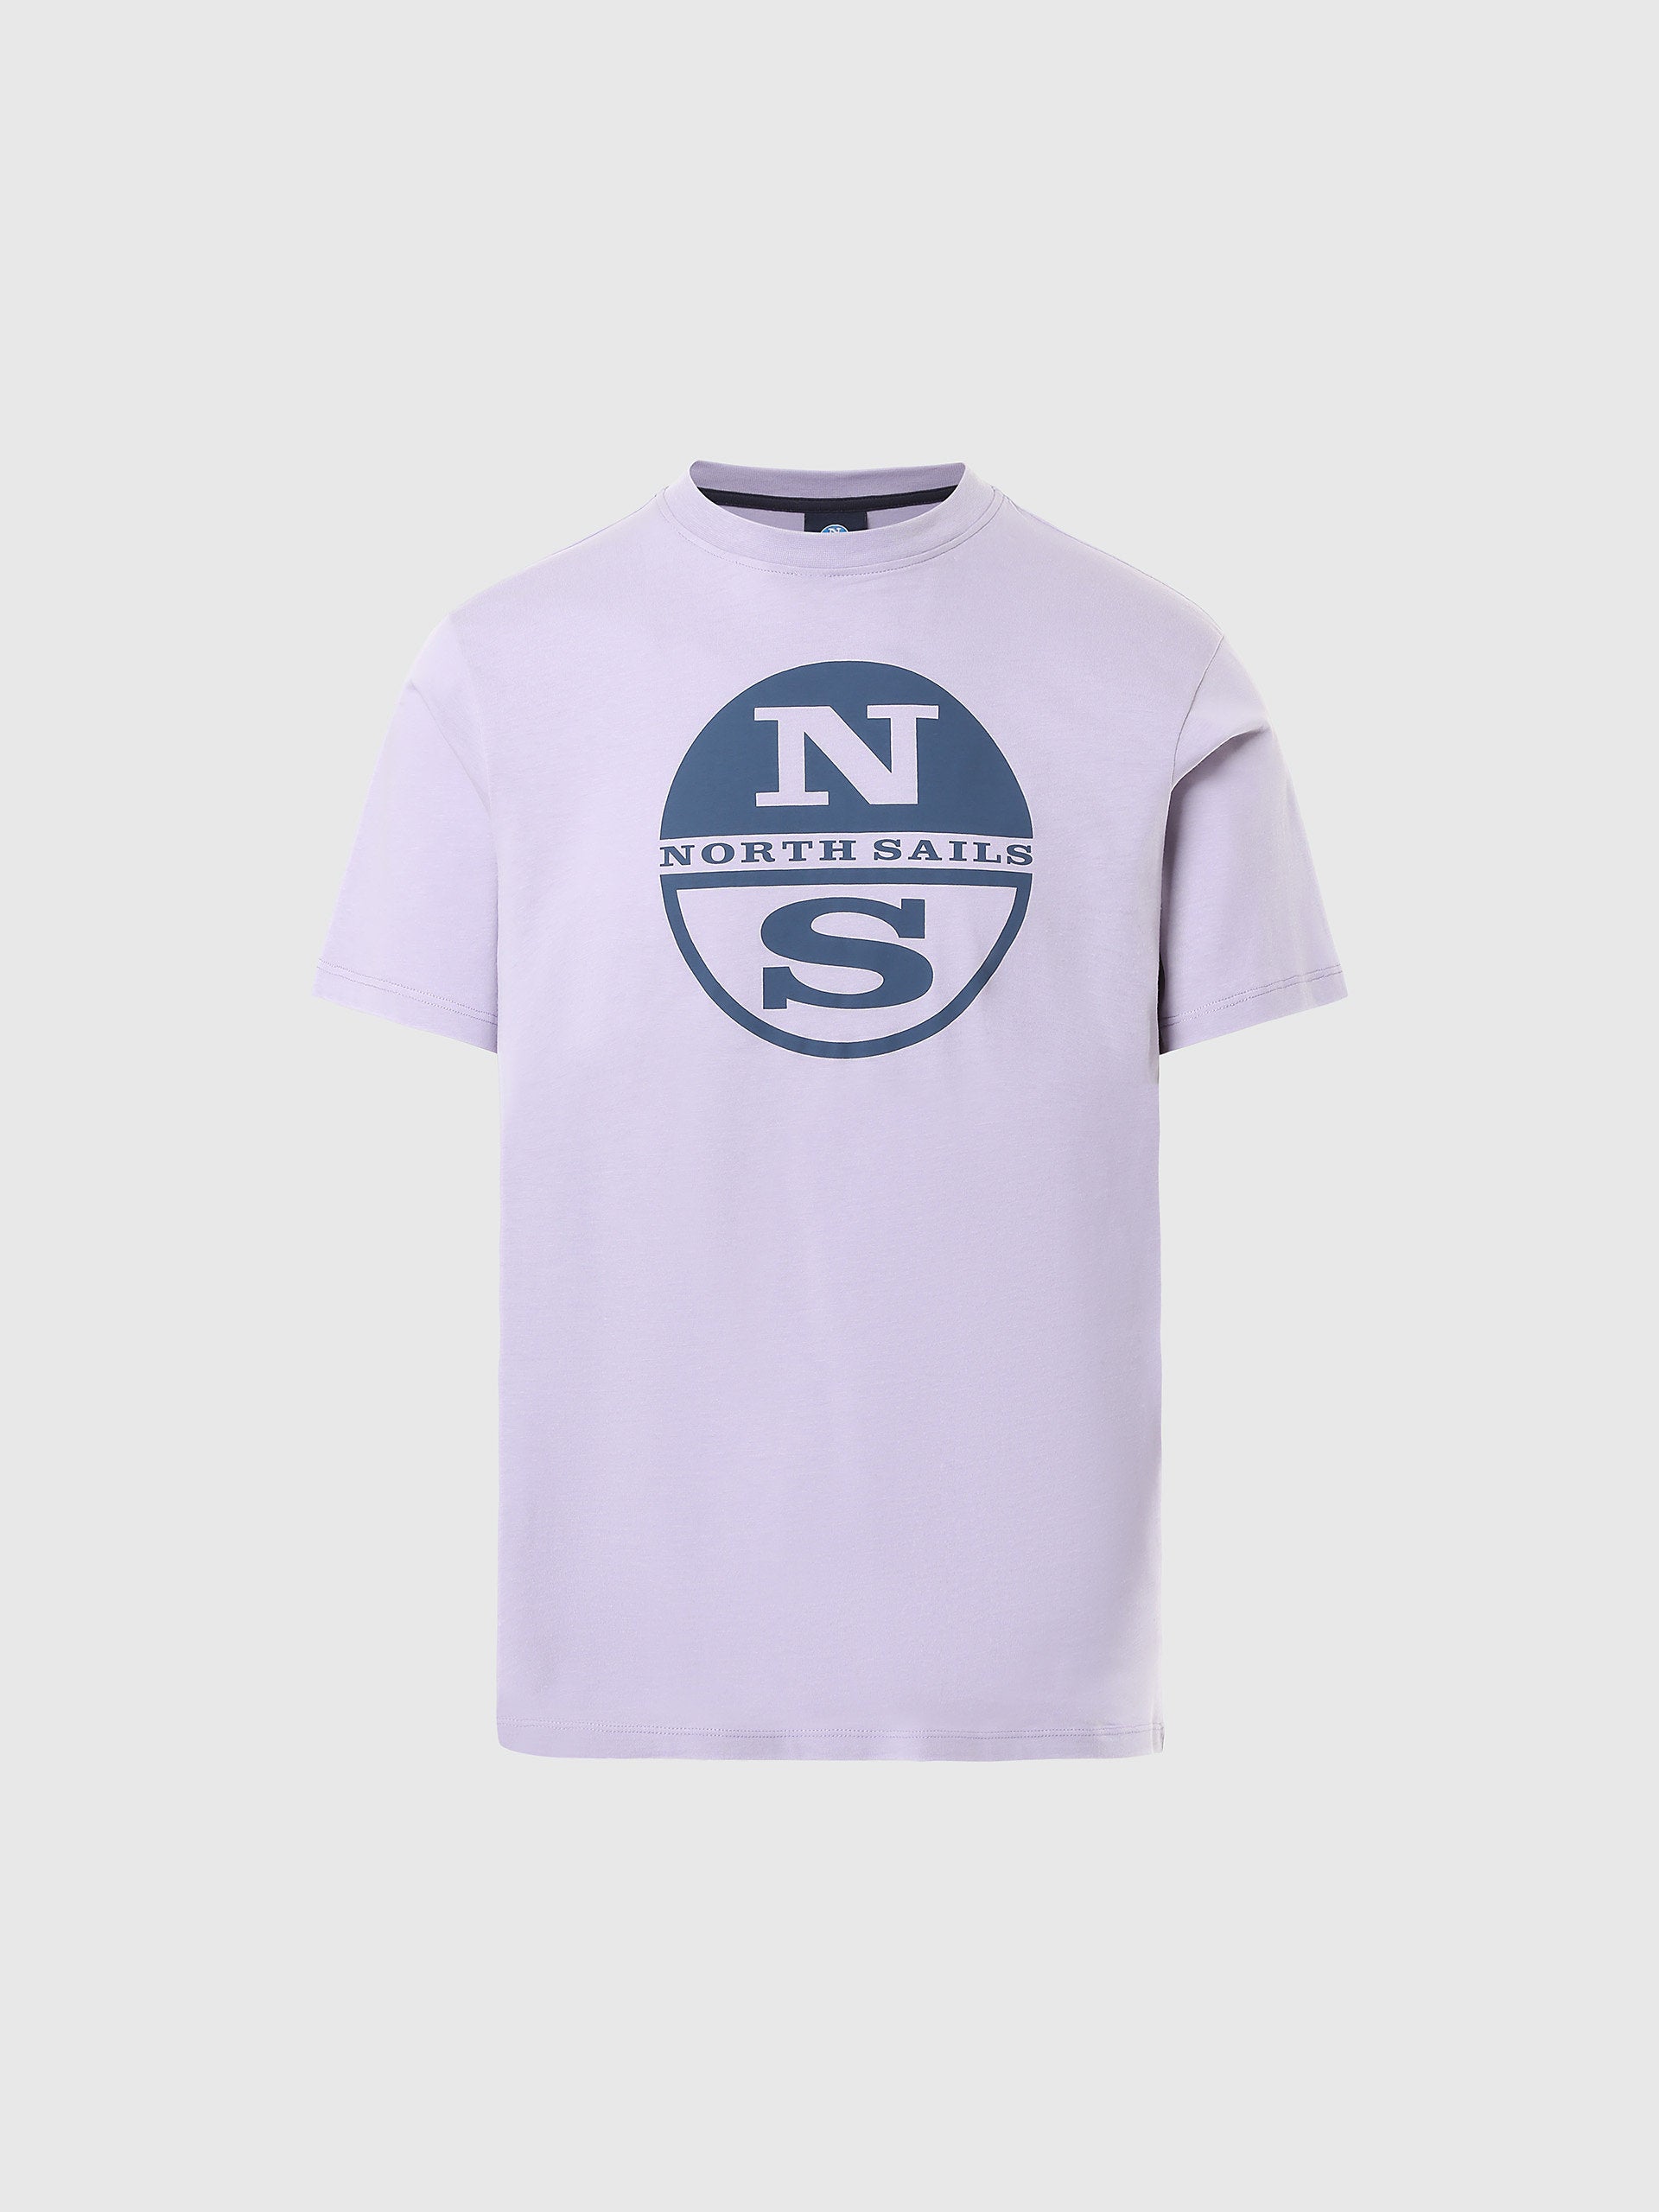 North Sails - T-shirt con stampa maxi logoNorth SailsDusty lilacXL